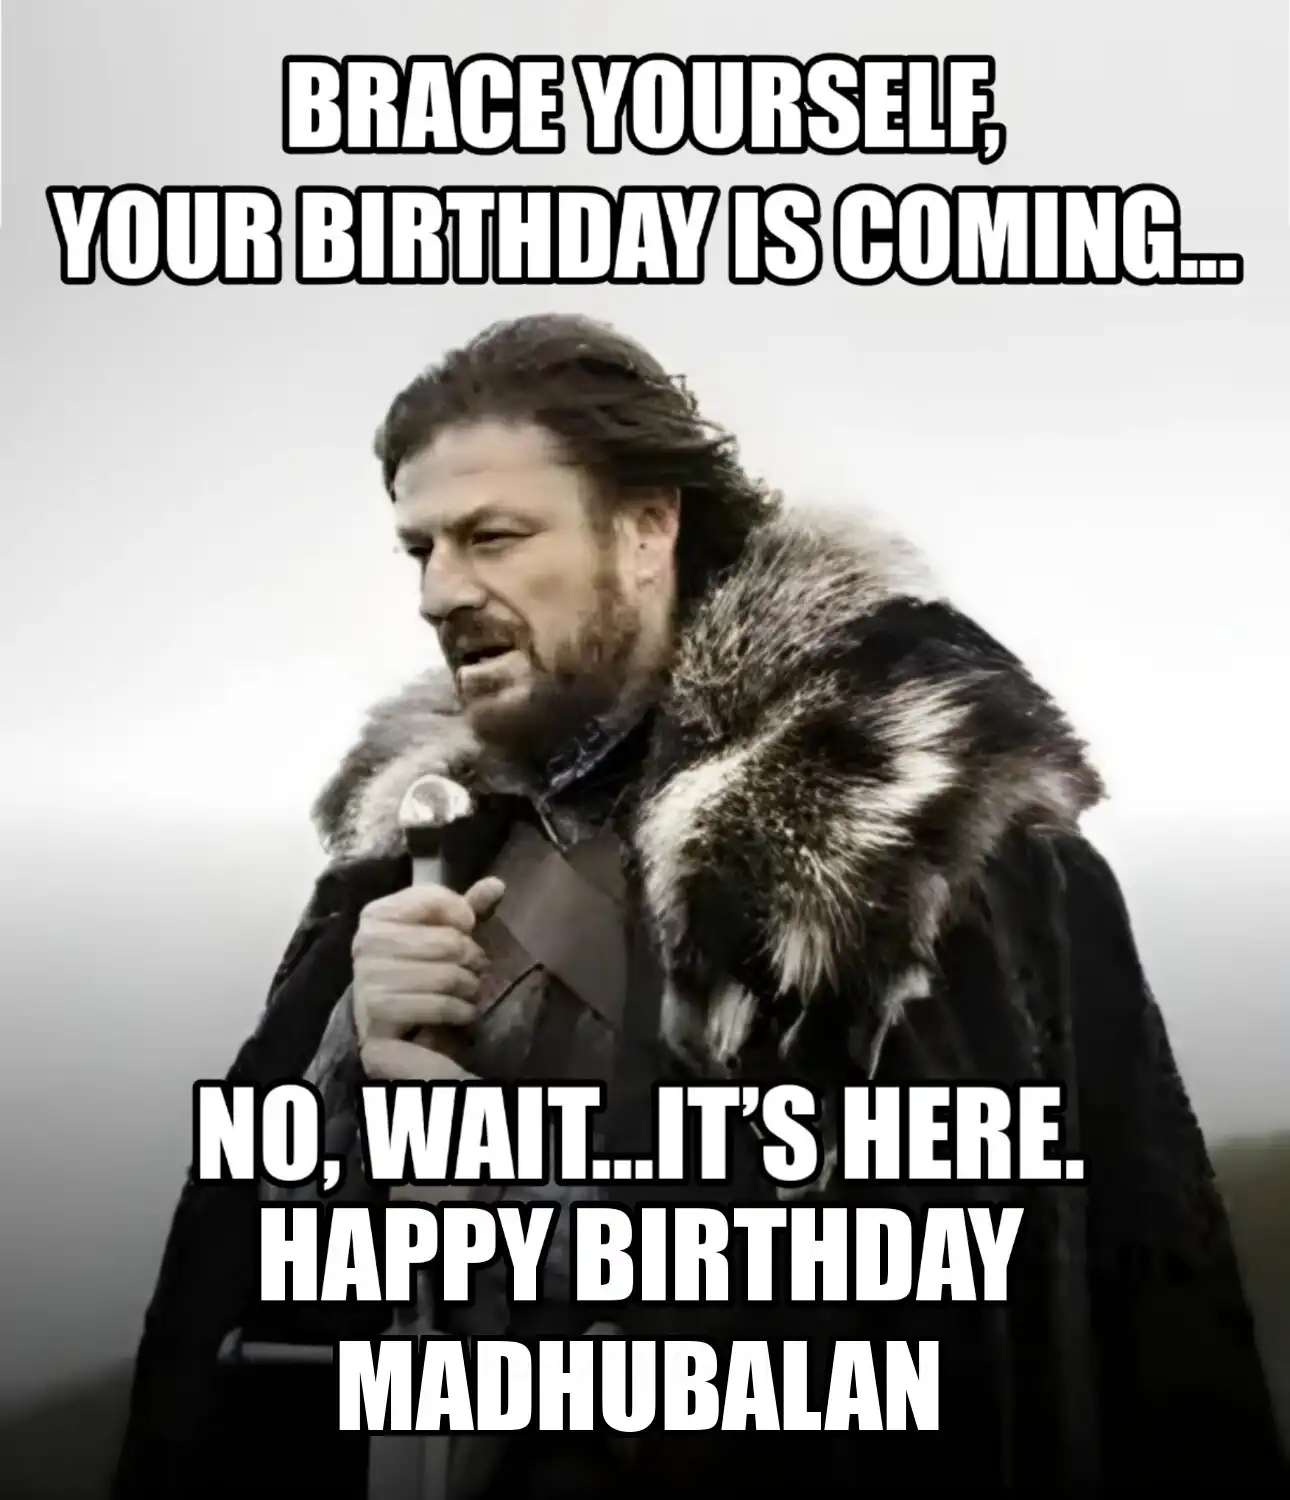 Happy Birthday Madhubalan Brace Yourself Your Birthday Is Coming Meme